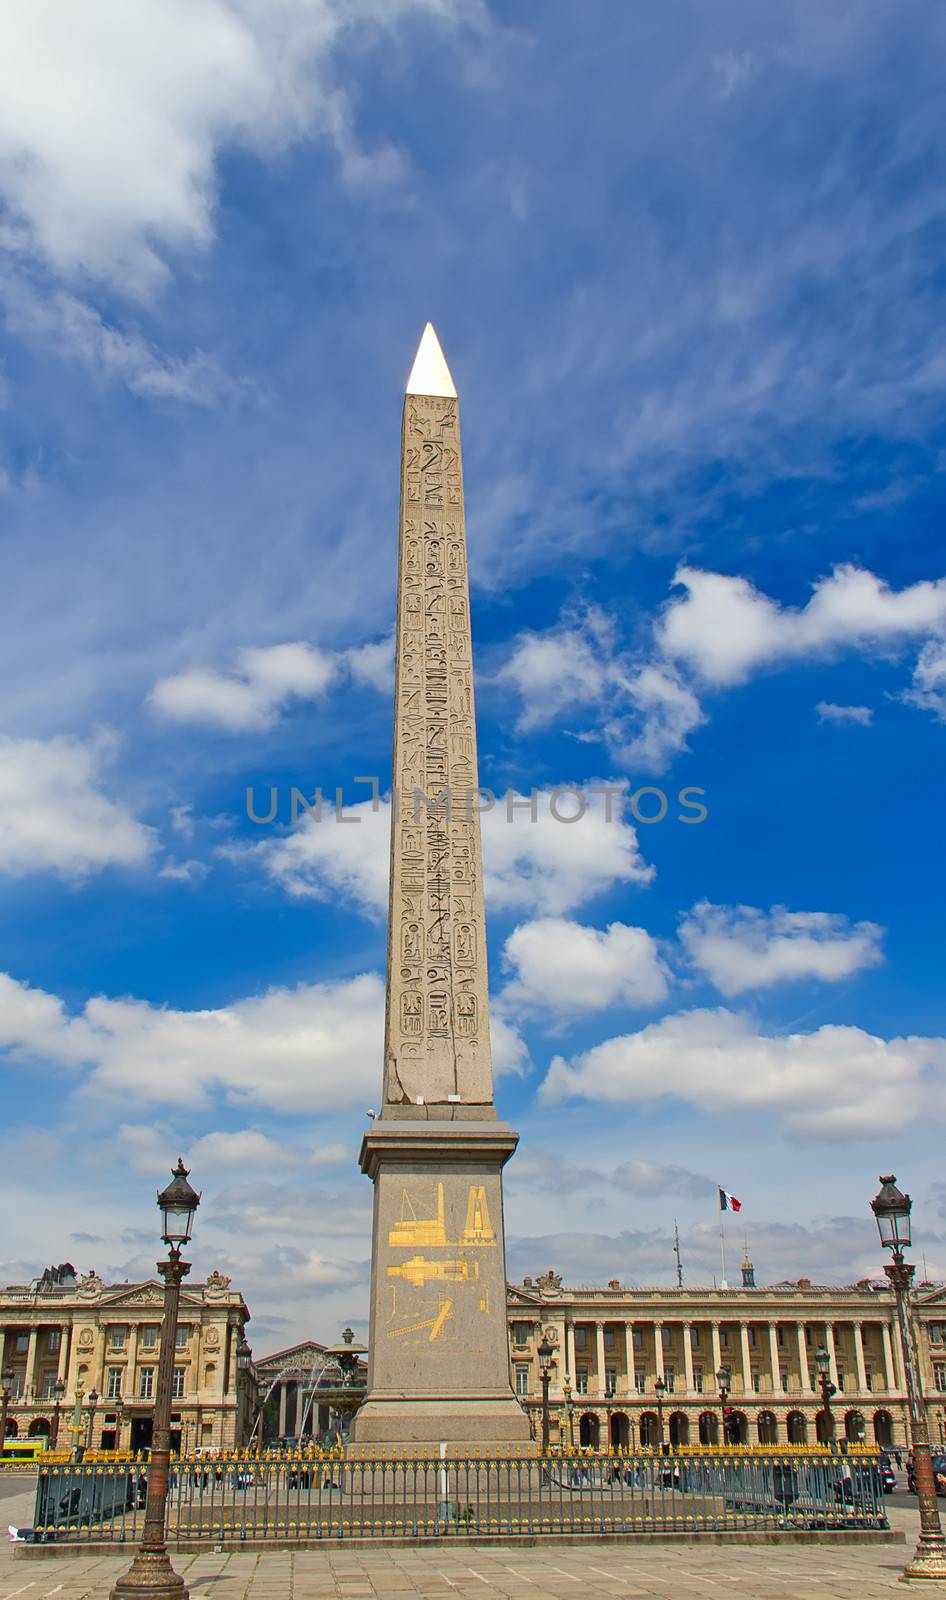 Egyptian obelisk by swisshippo